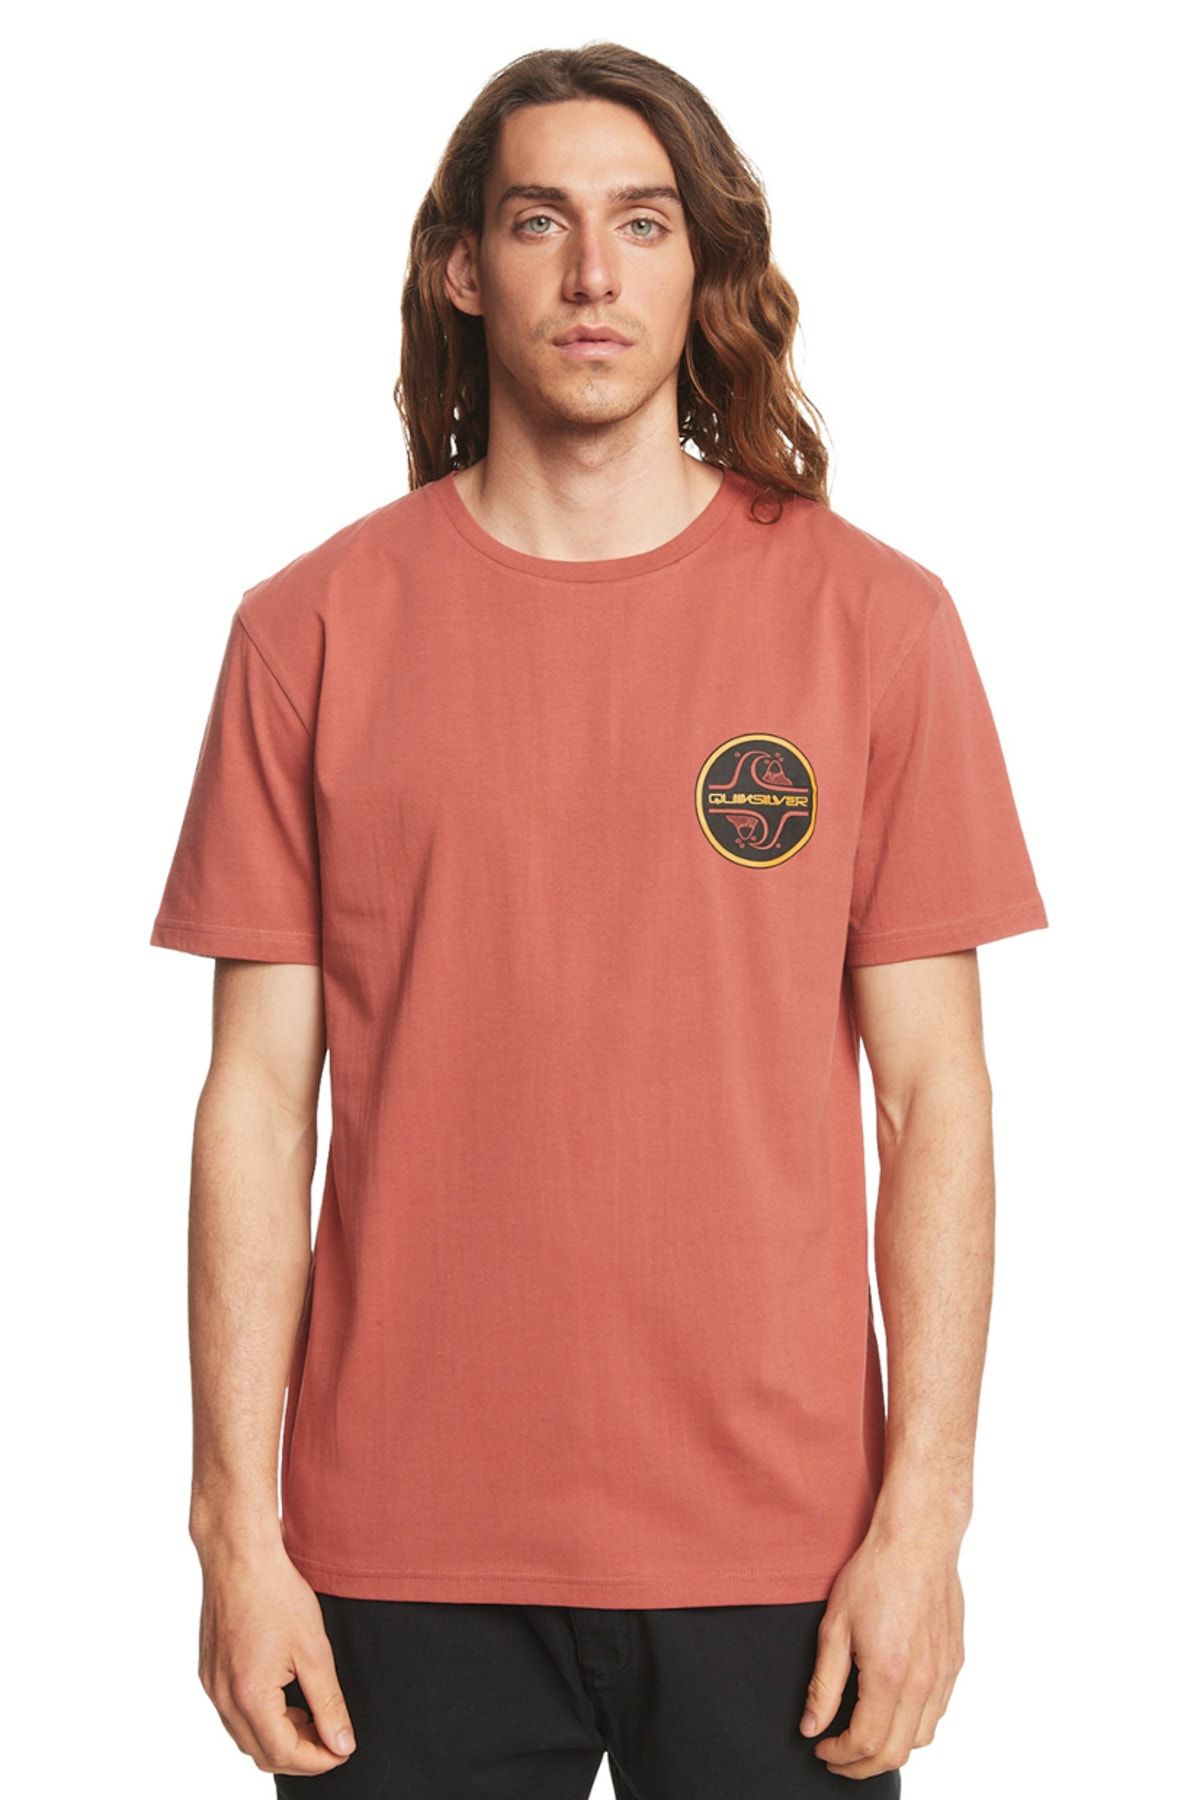 Quiksilver T-Shirt - Orange - Regular Fit - Trendyol